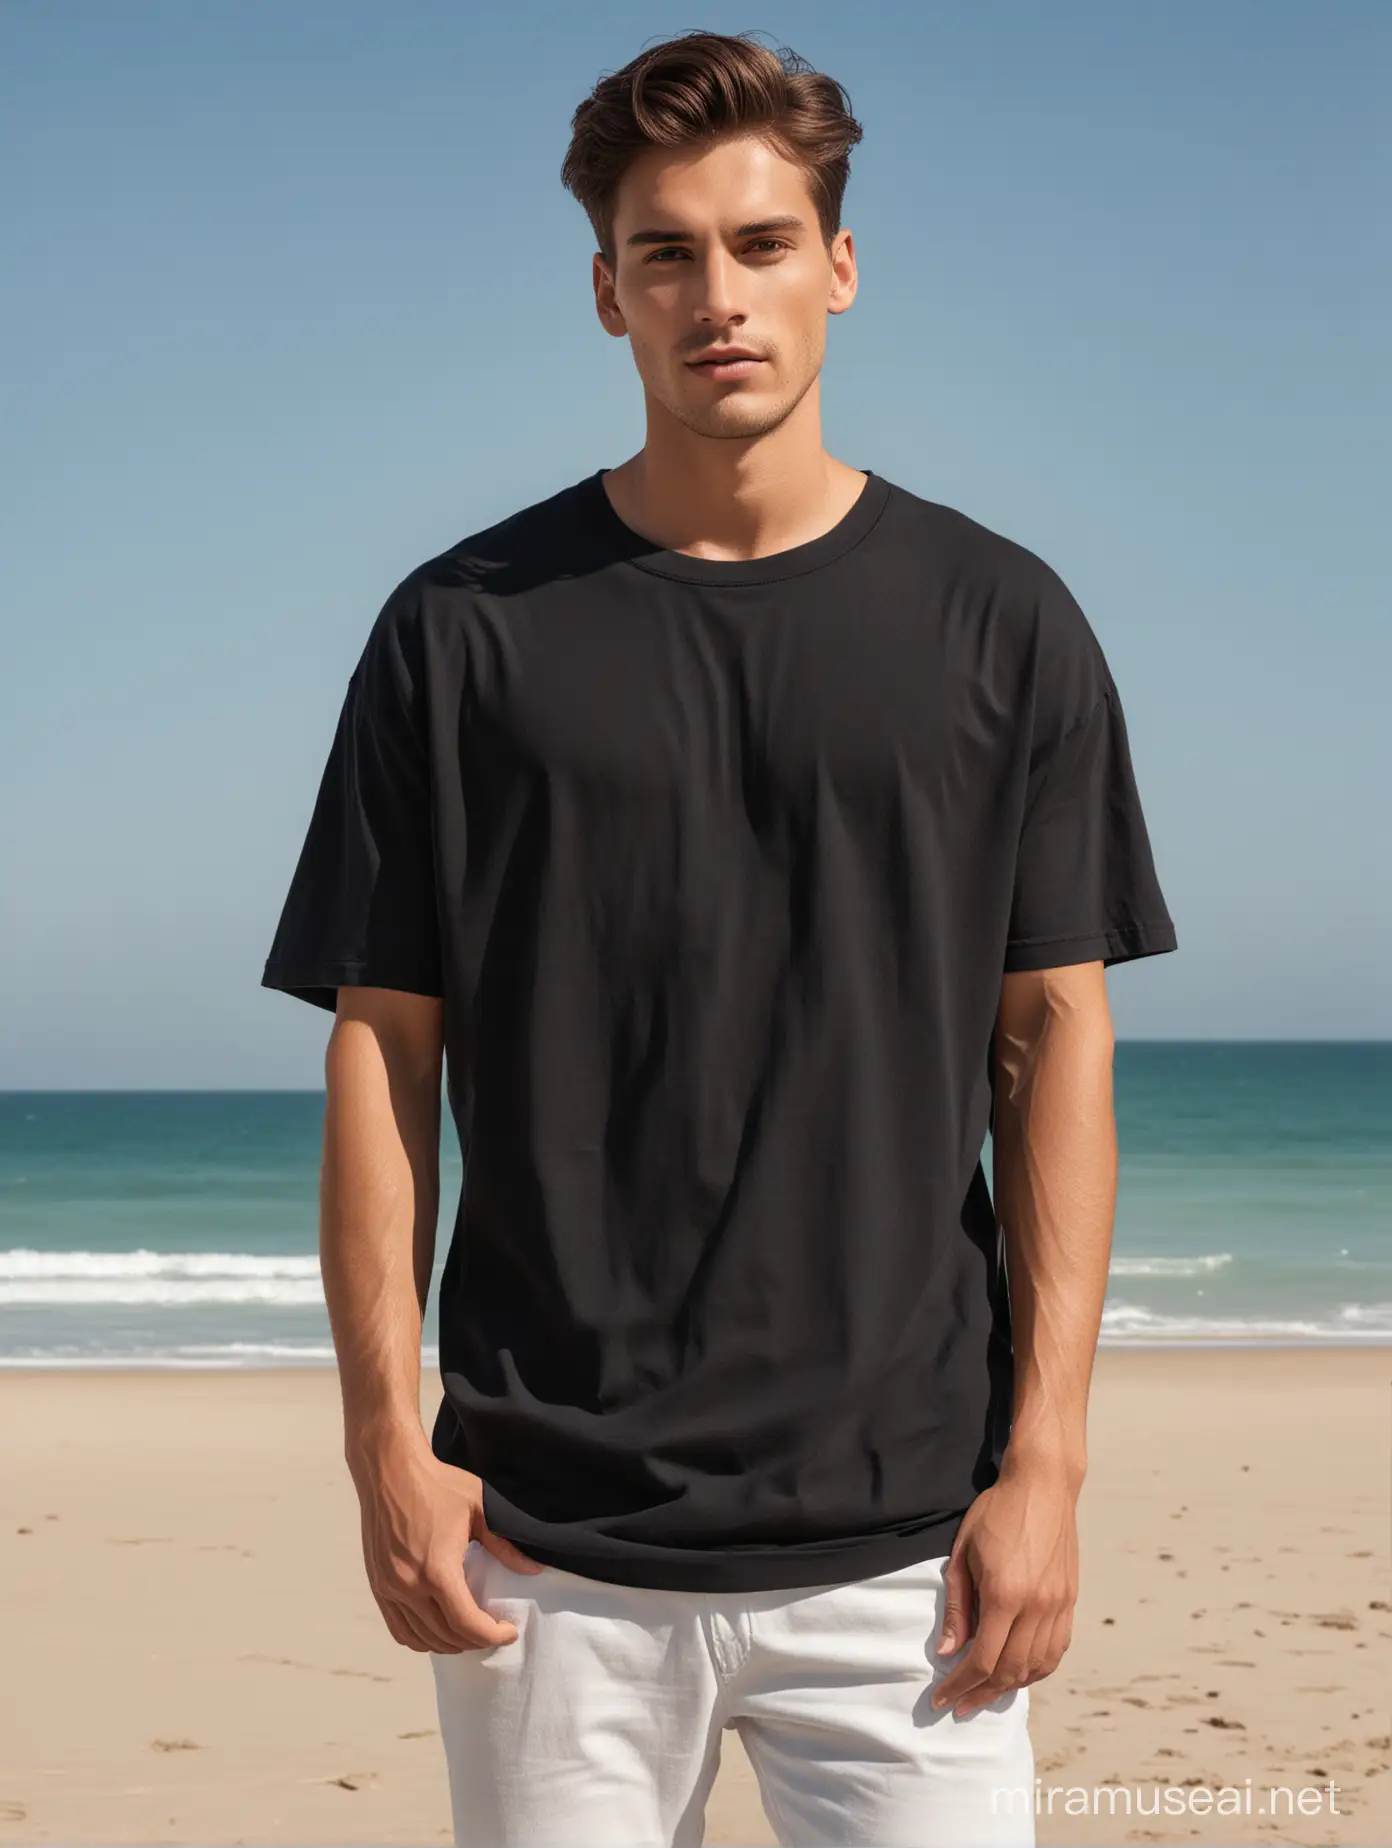 Stylish Male Model Posing on Beach in Oversized Black Tshirt